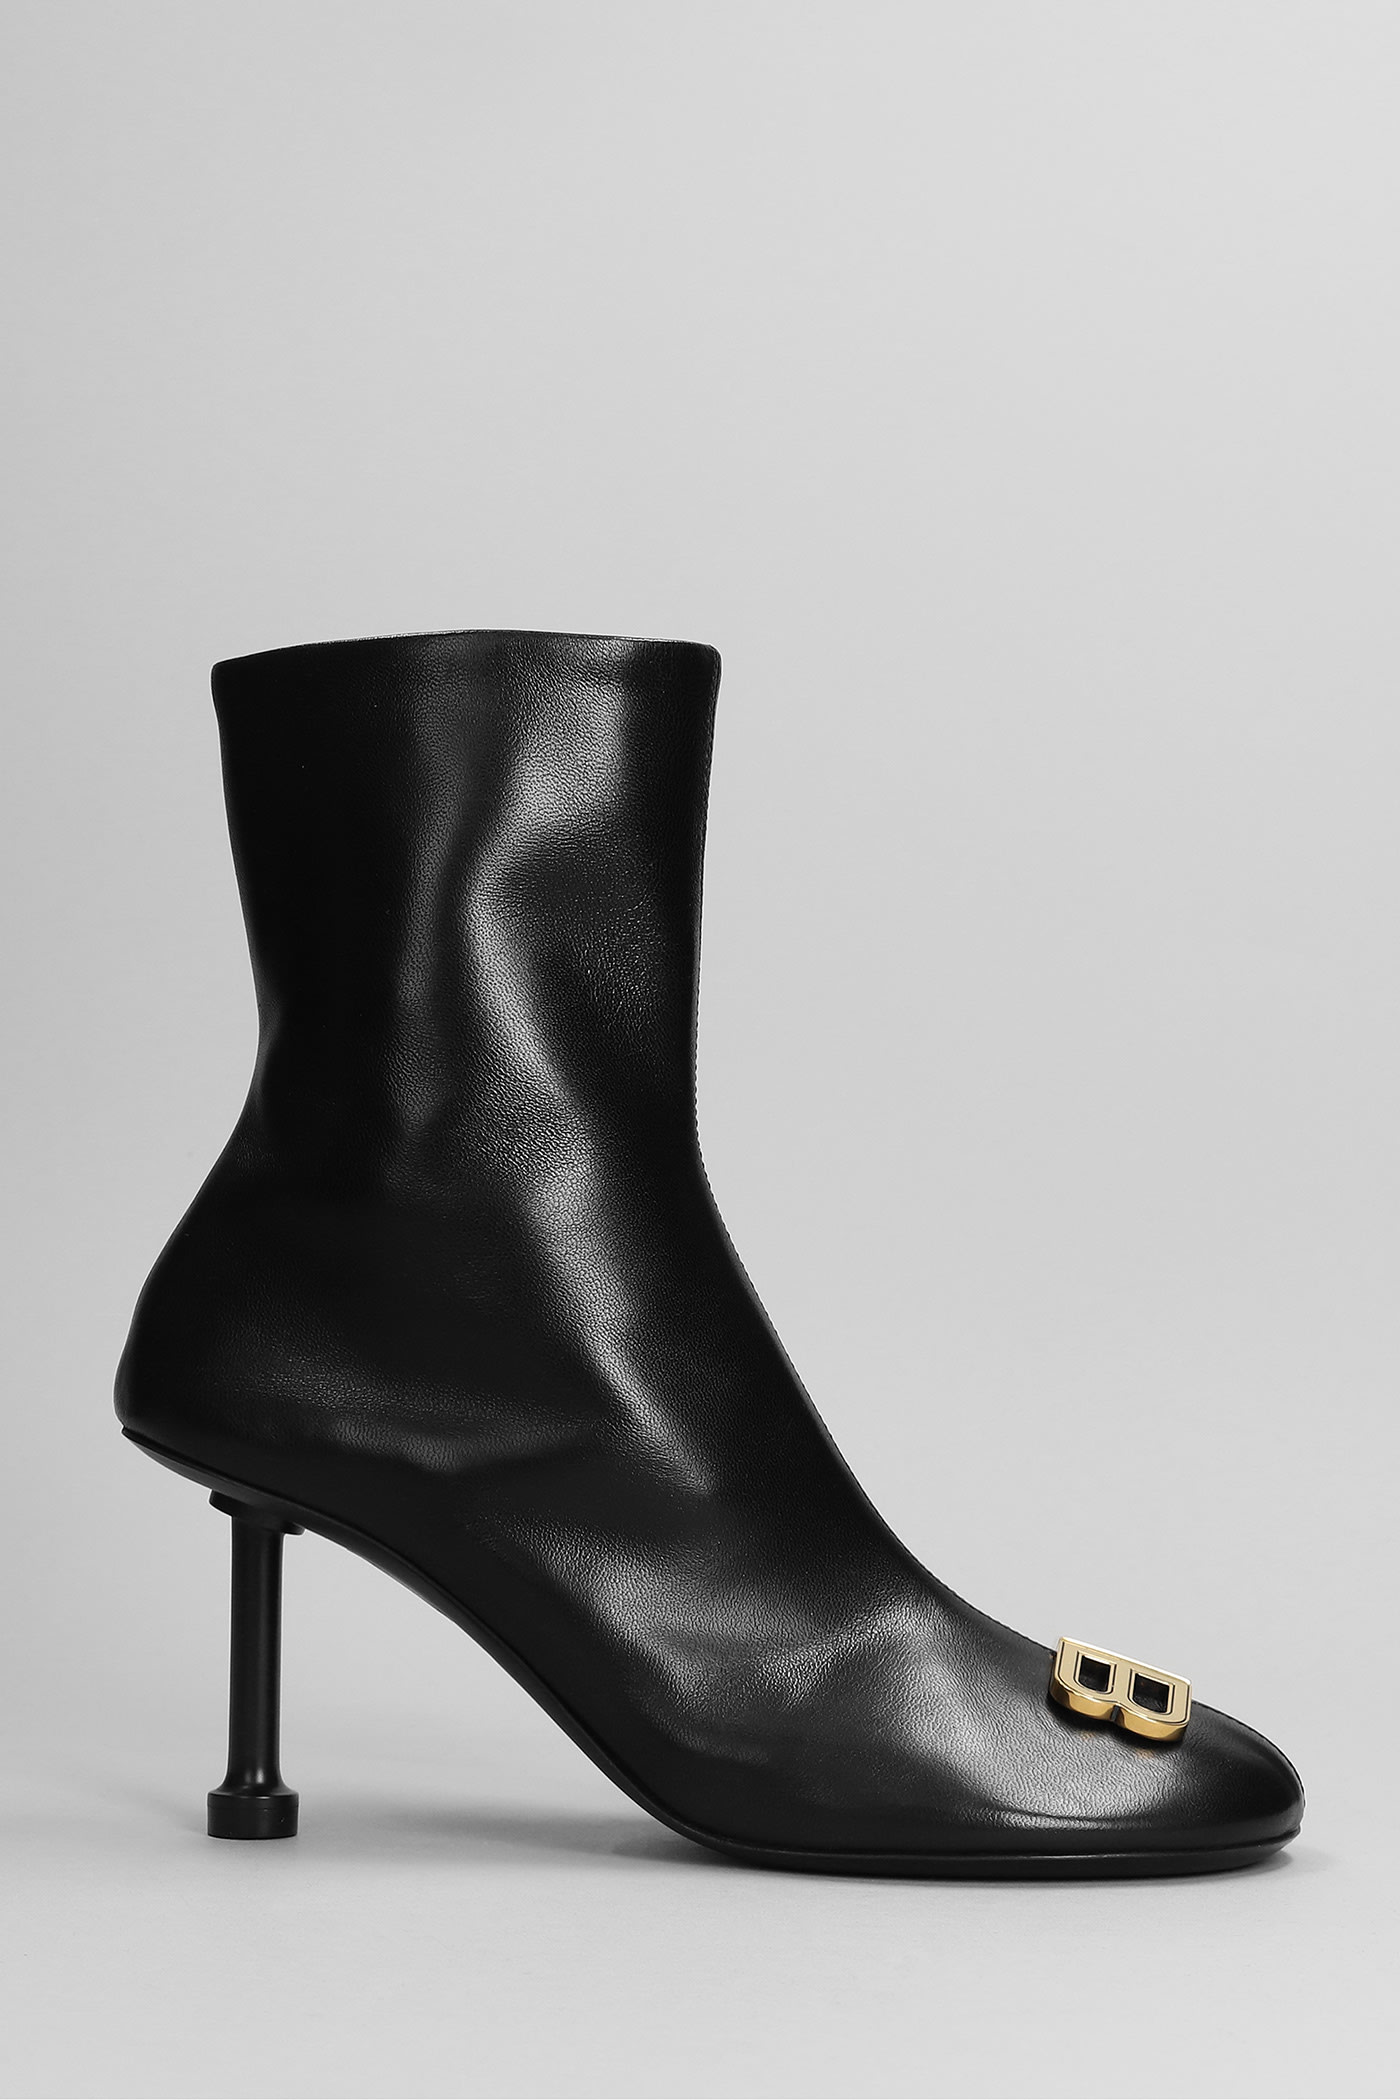 Leather boots Balenciaga Black size 41 EU in Leather  29421289